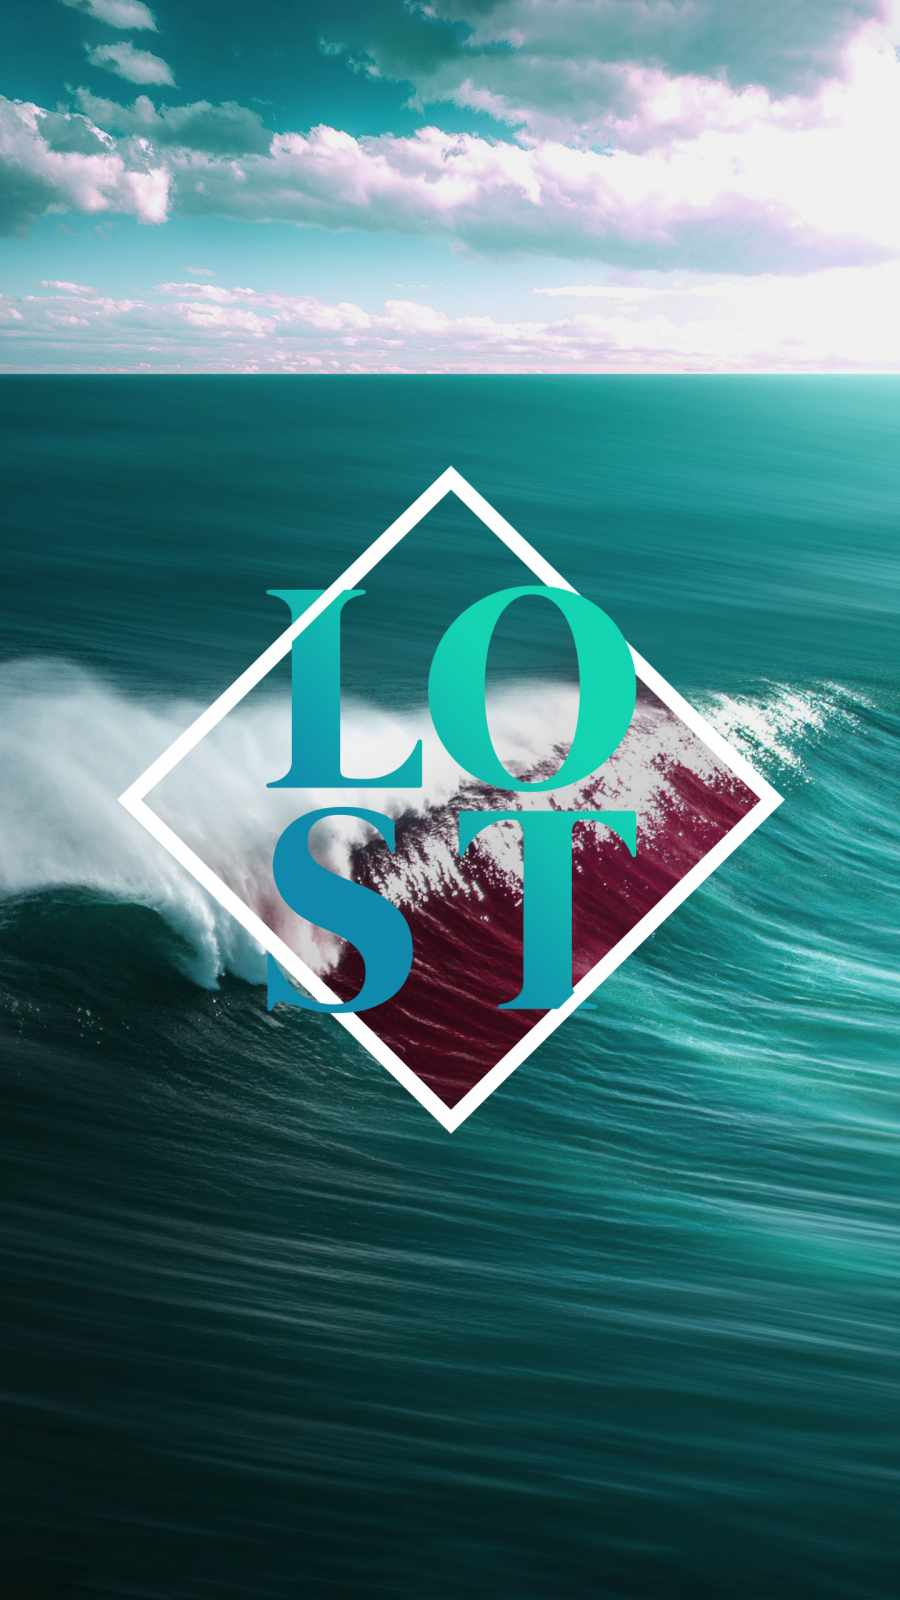 Lost In The Ocean IPhone Wallpaper HD  IPhone Wallpapers